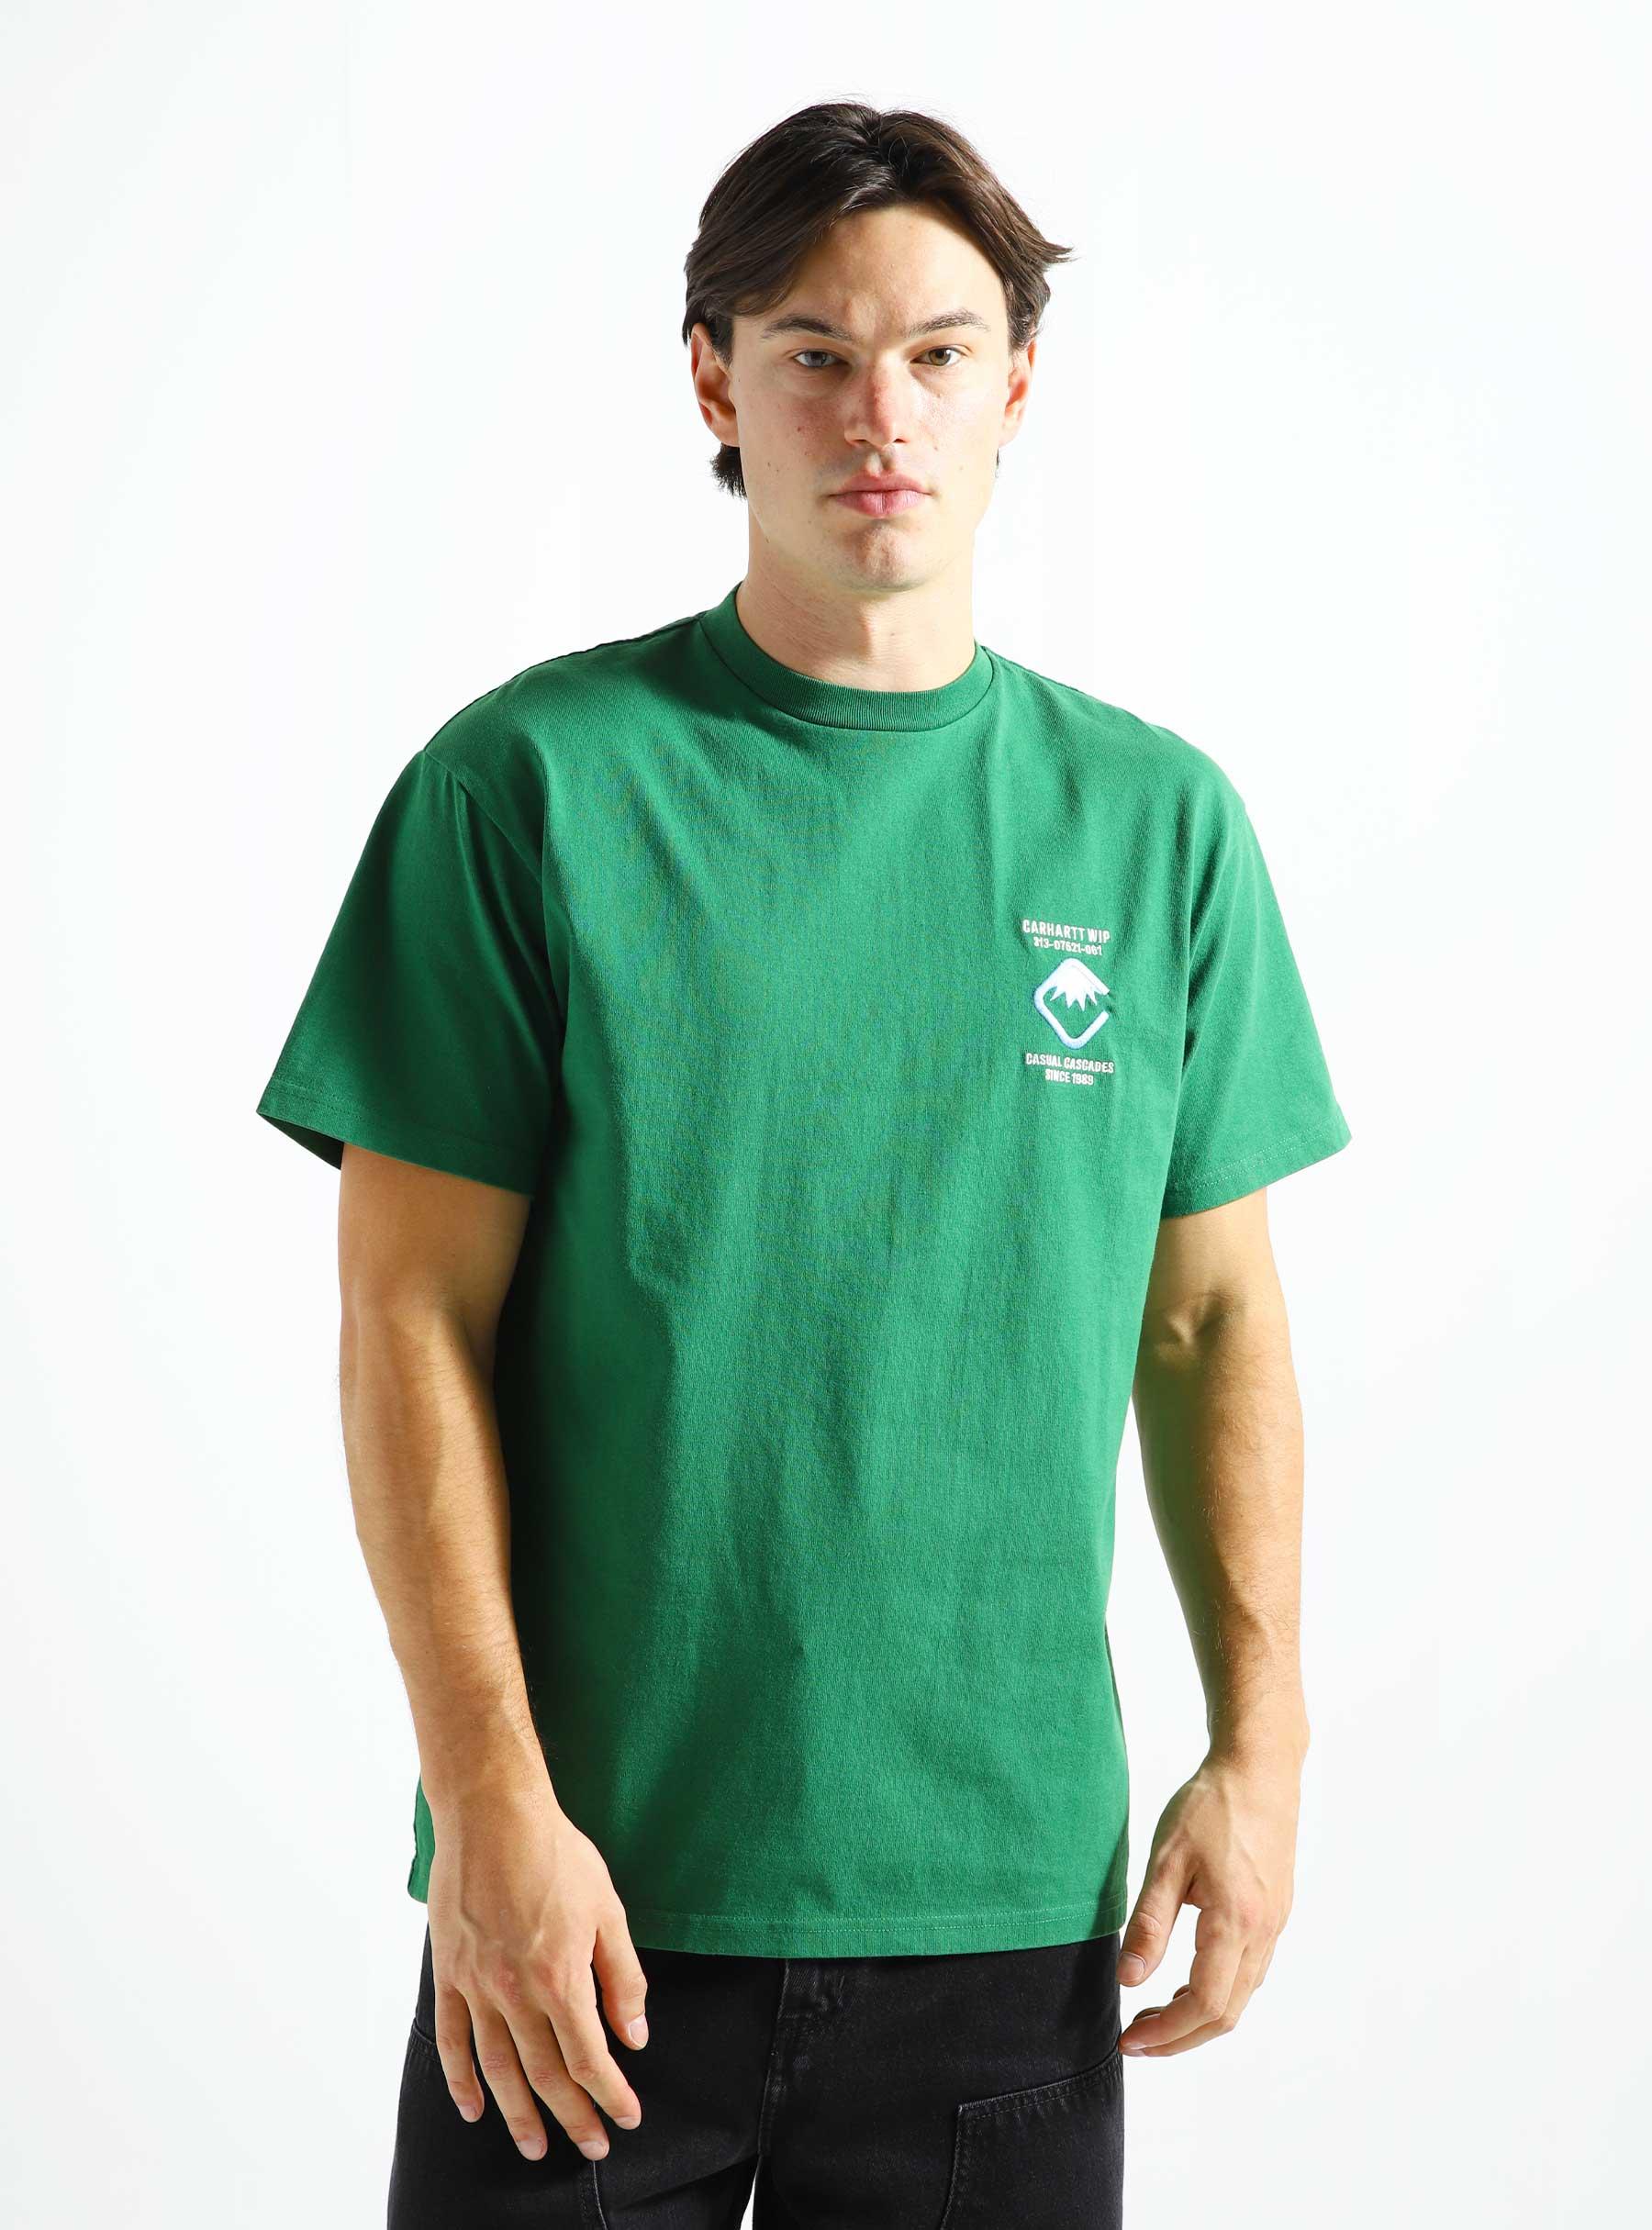 Aspen T-Shirt Aspen Green I032413-1NR4G